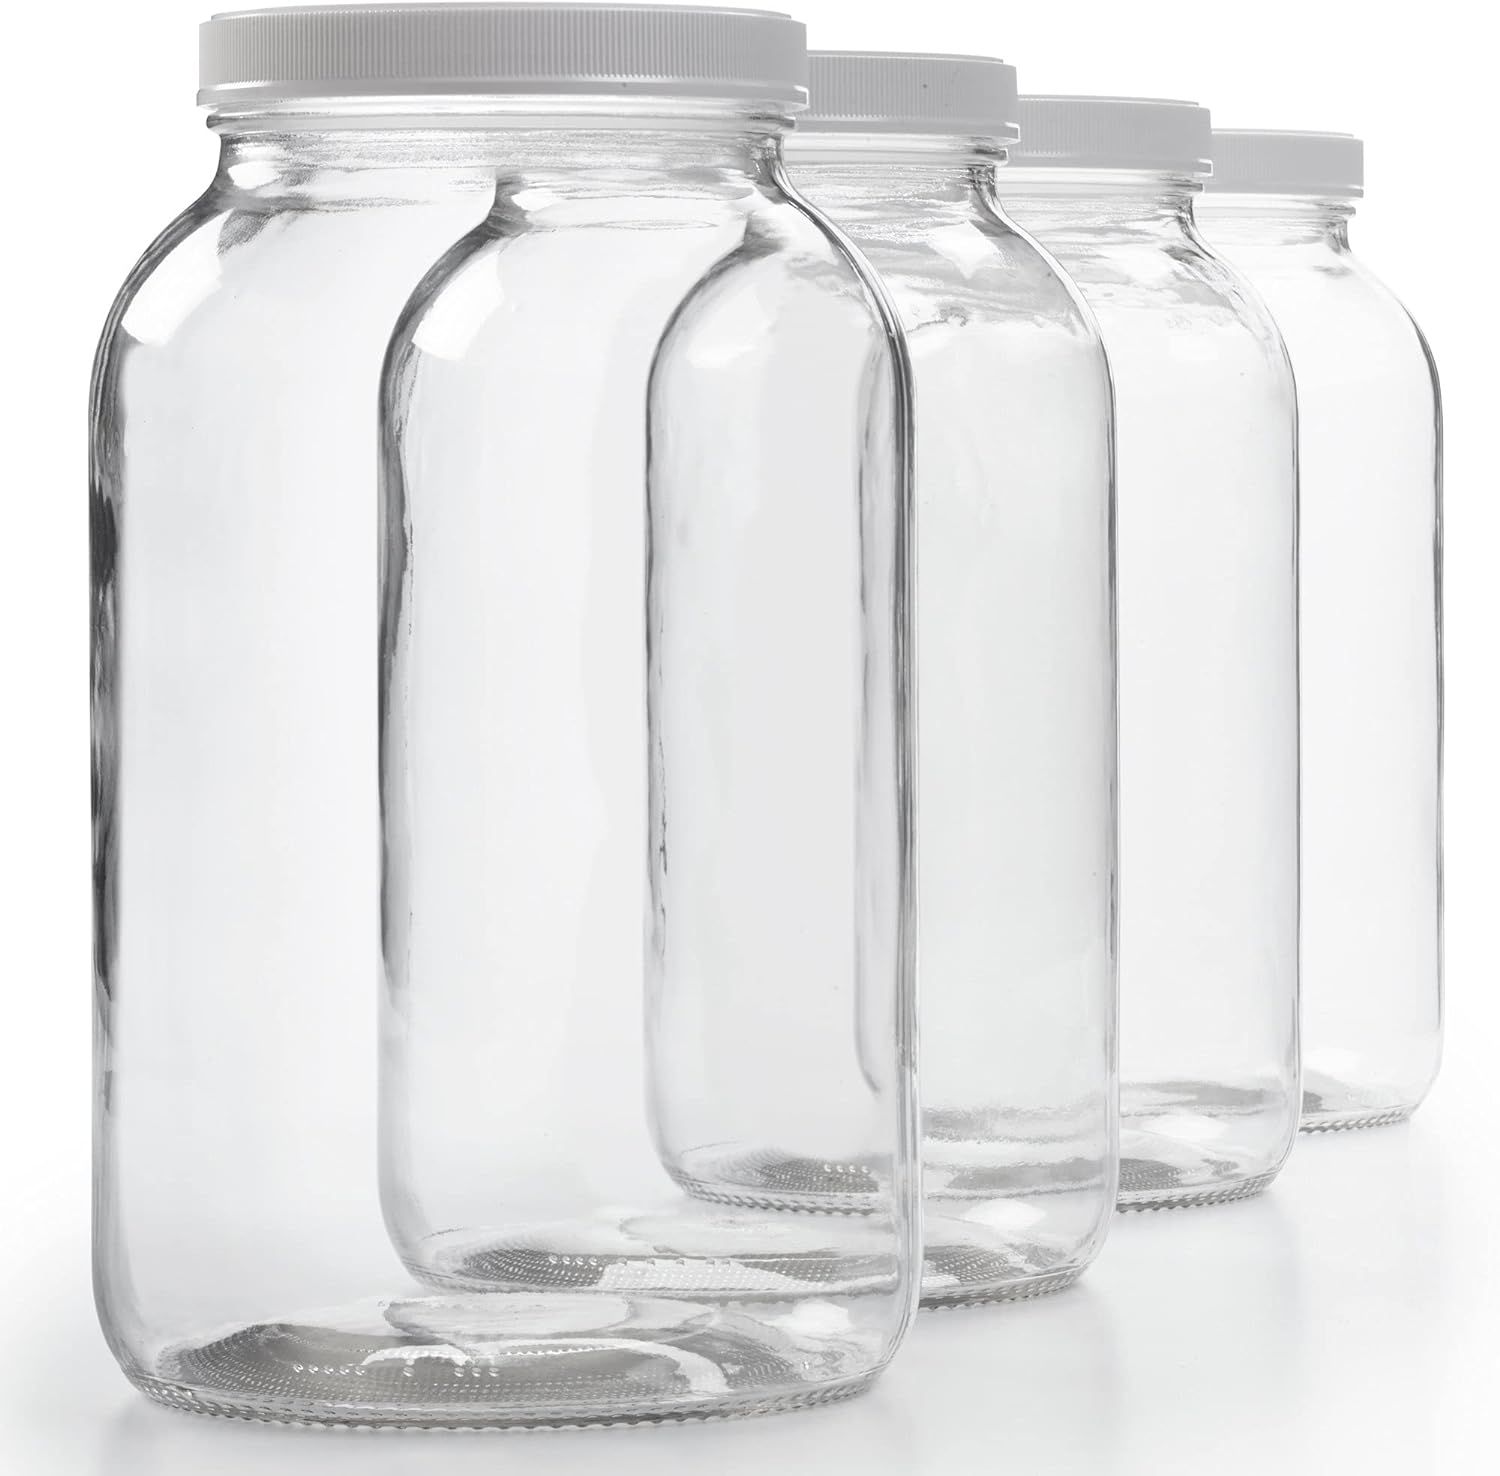 Wide Mouth 1 Gallon Glass Jar with Lid - Glass Gallon Jar for Kombucha  Sun Tea Gallon Mason Jars are Large Glass Jars with Lids 1 Gallon for Food Storage - 4pk Large Jars with Airtight Plastic Lids